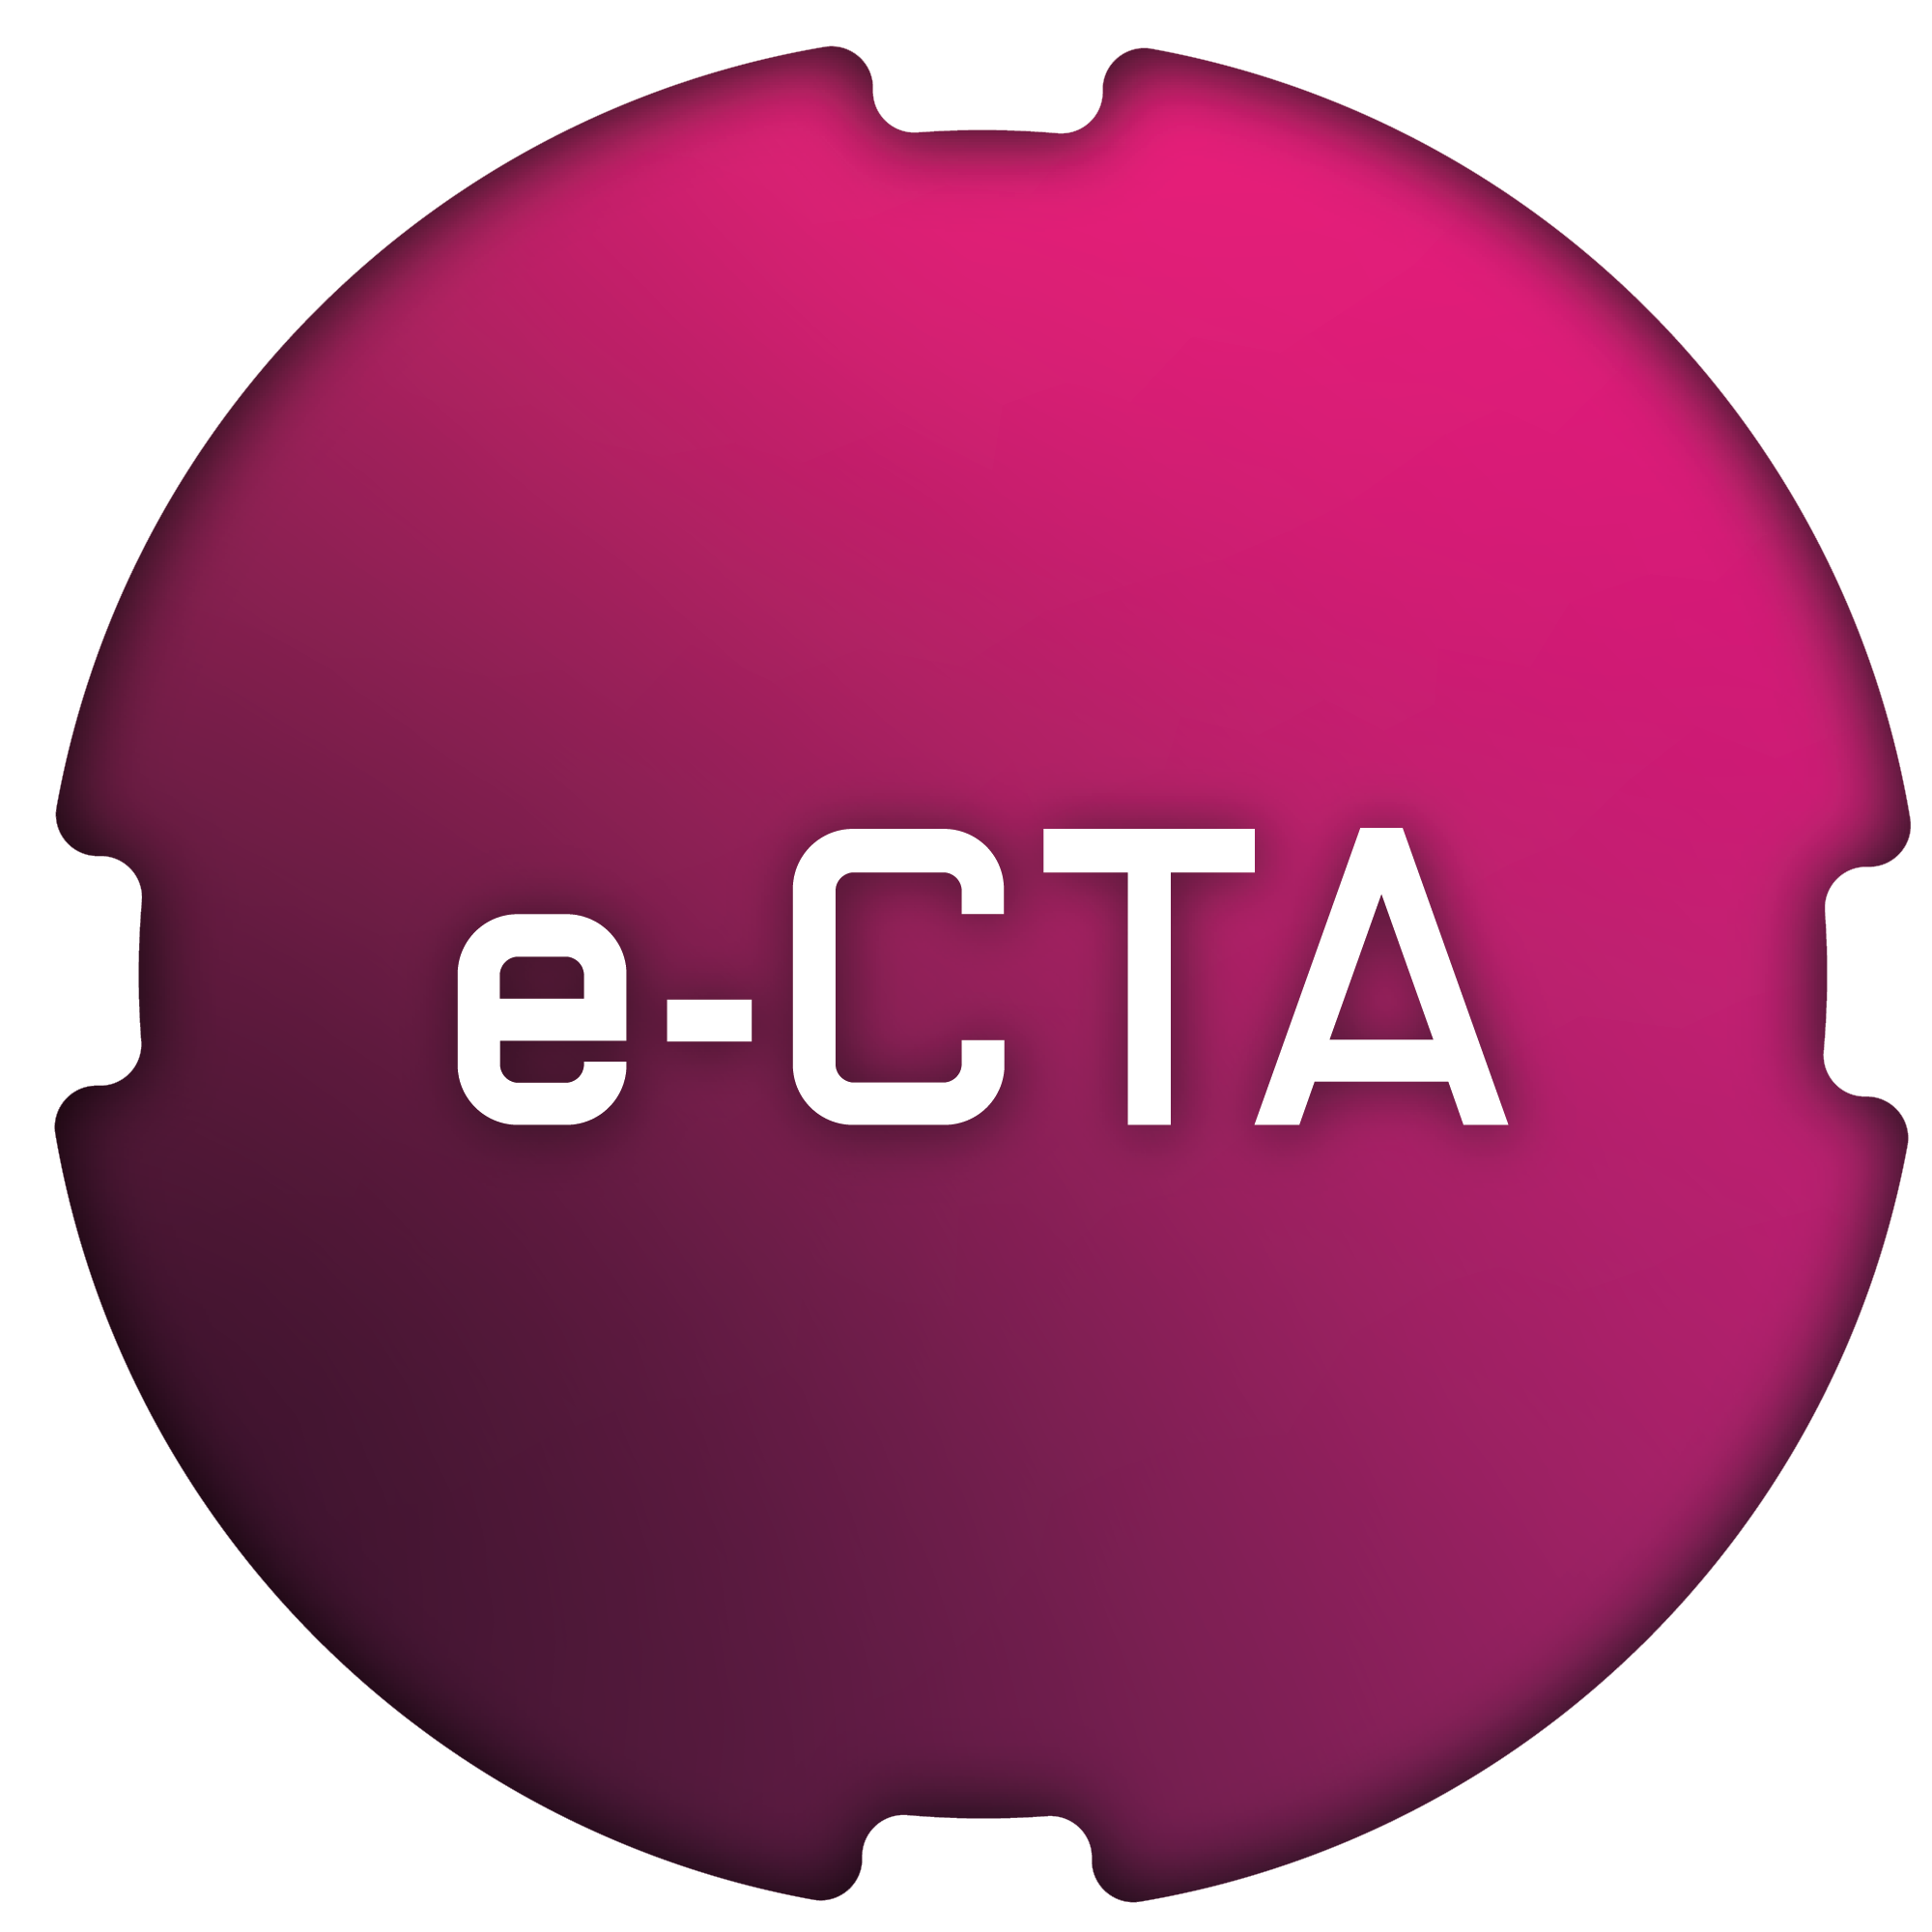 E CTA Typography Inside Symbol